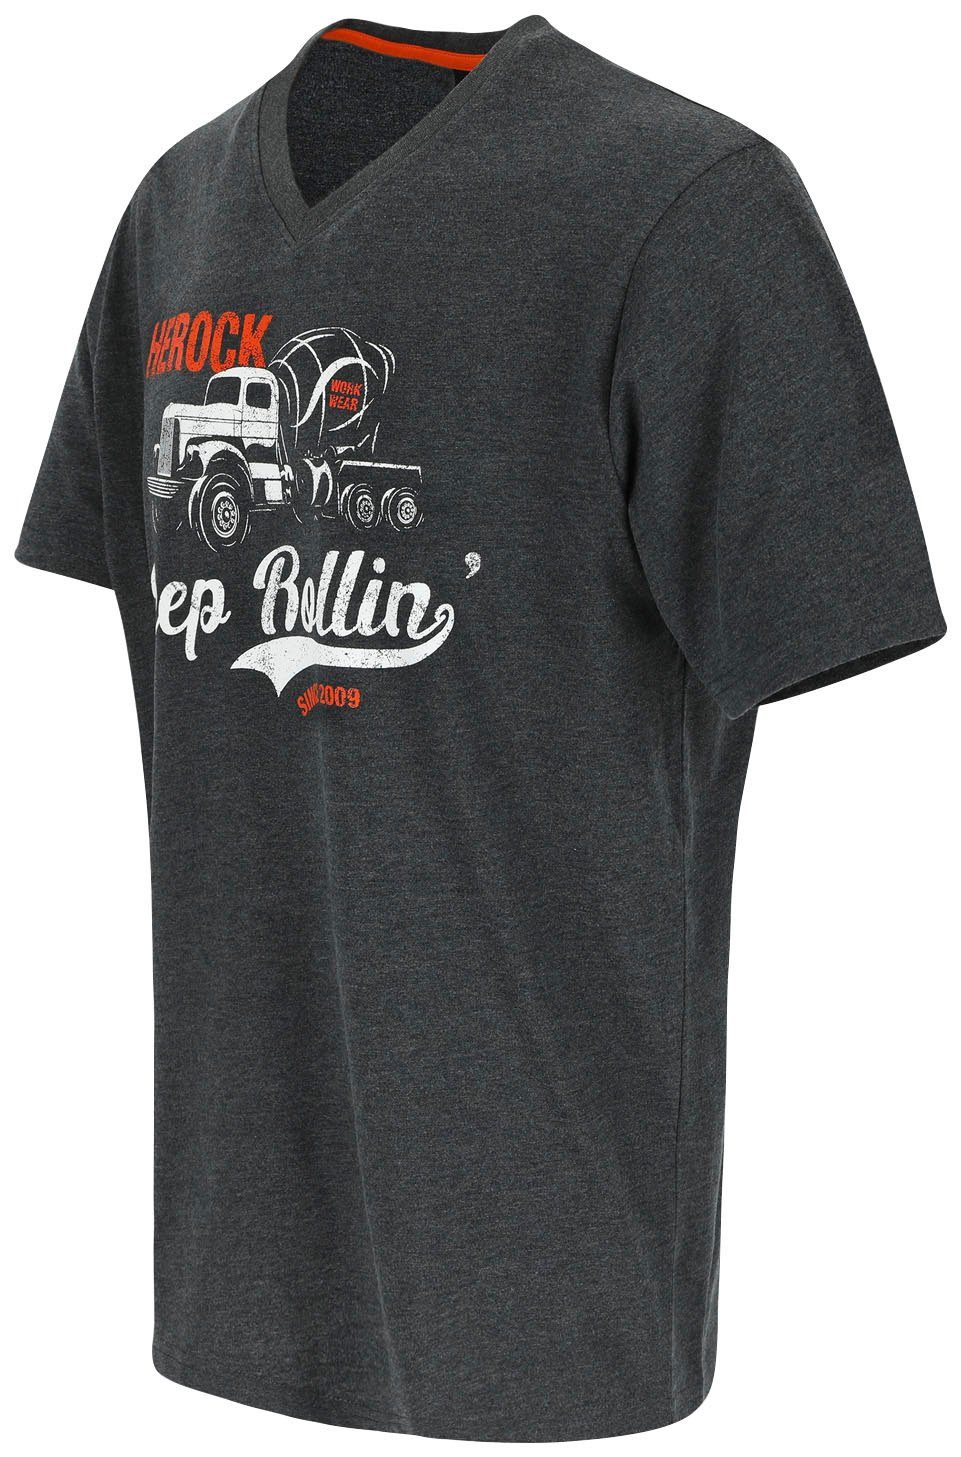 Herock T-Shirt Rollin Edition Limited